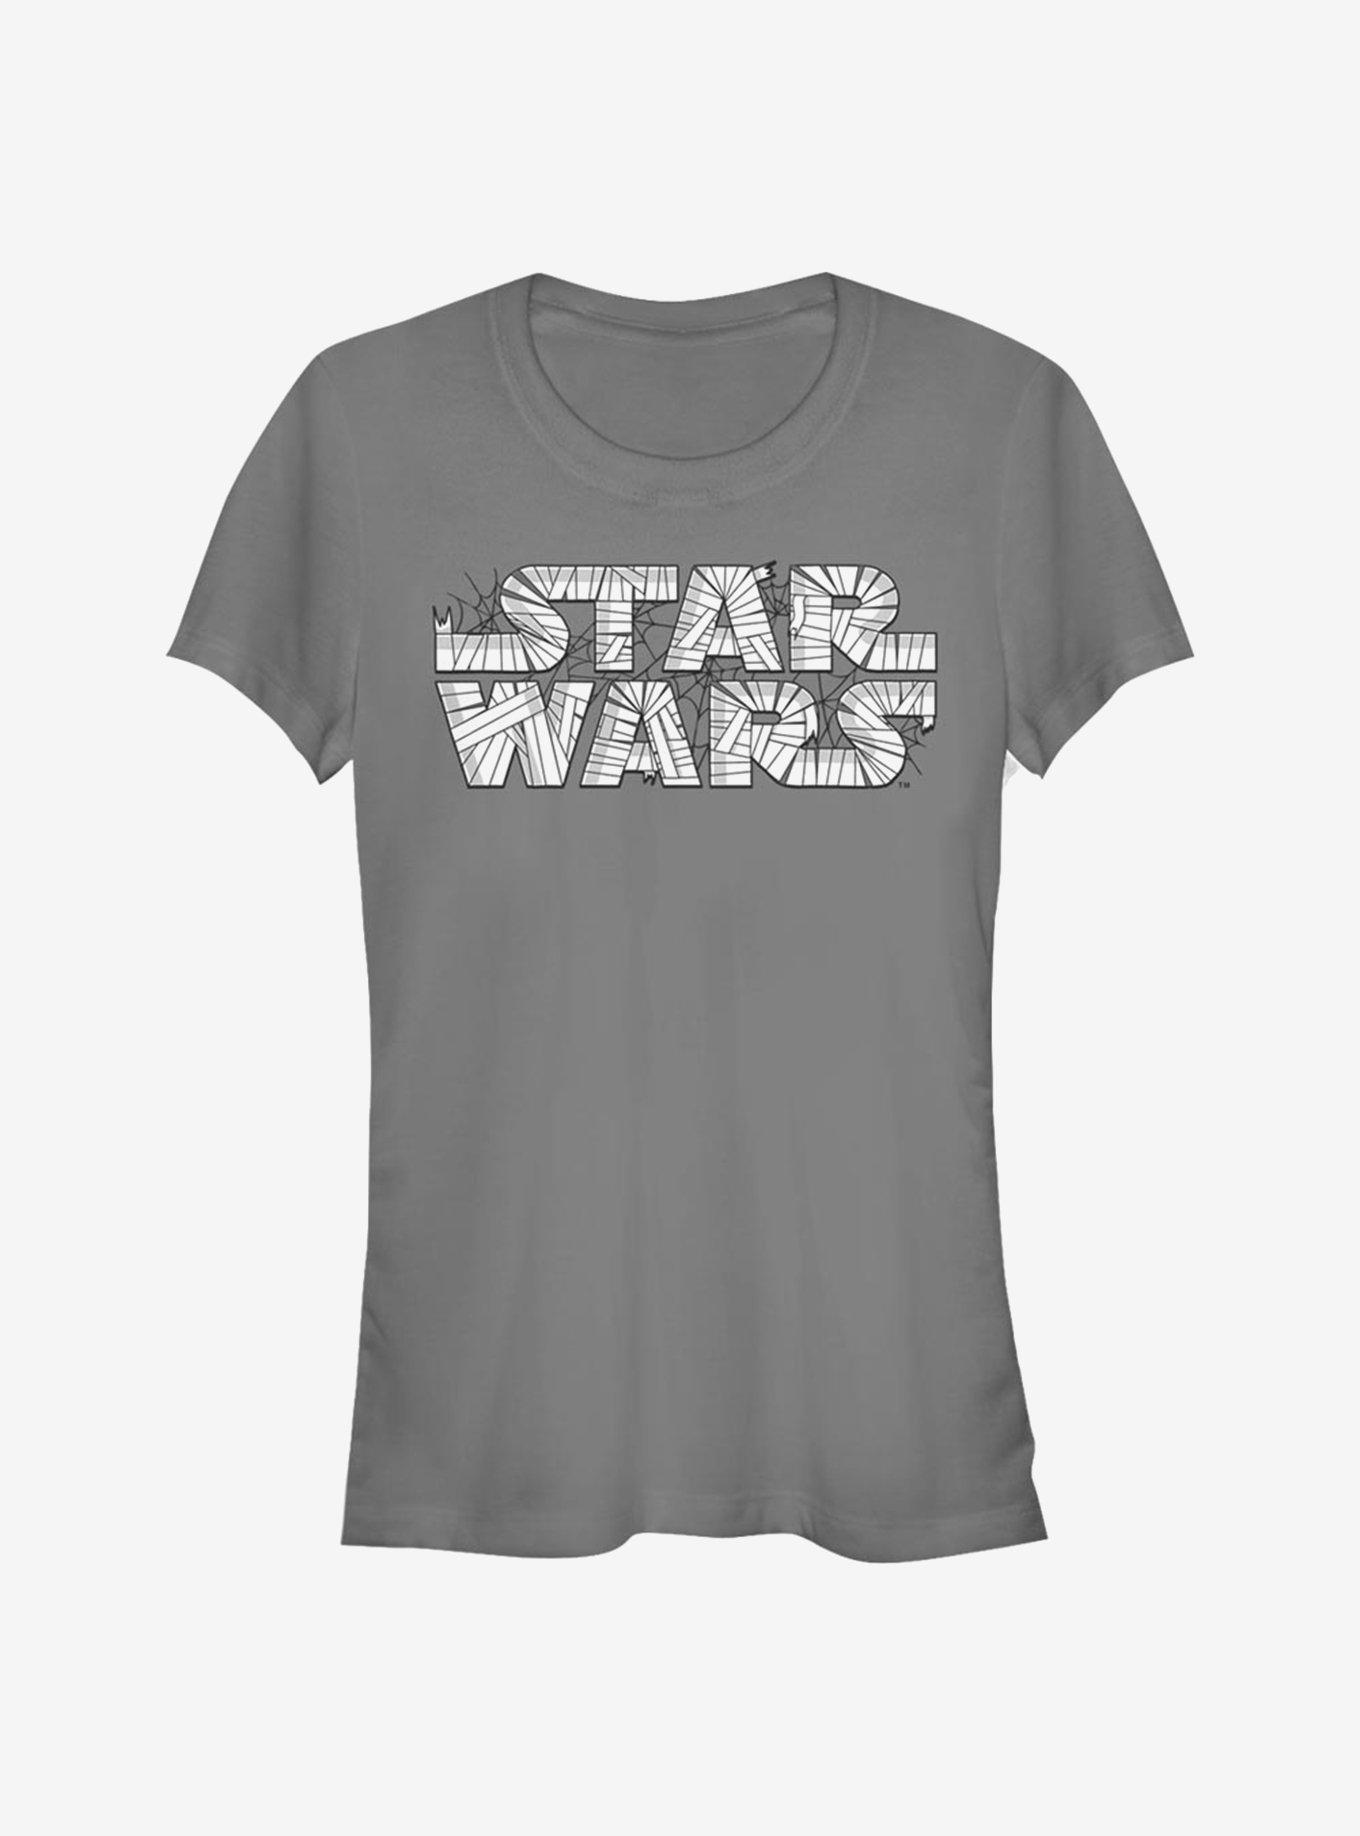 Star Wars Mummy Wrap Logo Girls T-Shirt, CHARCOAL, hi-res